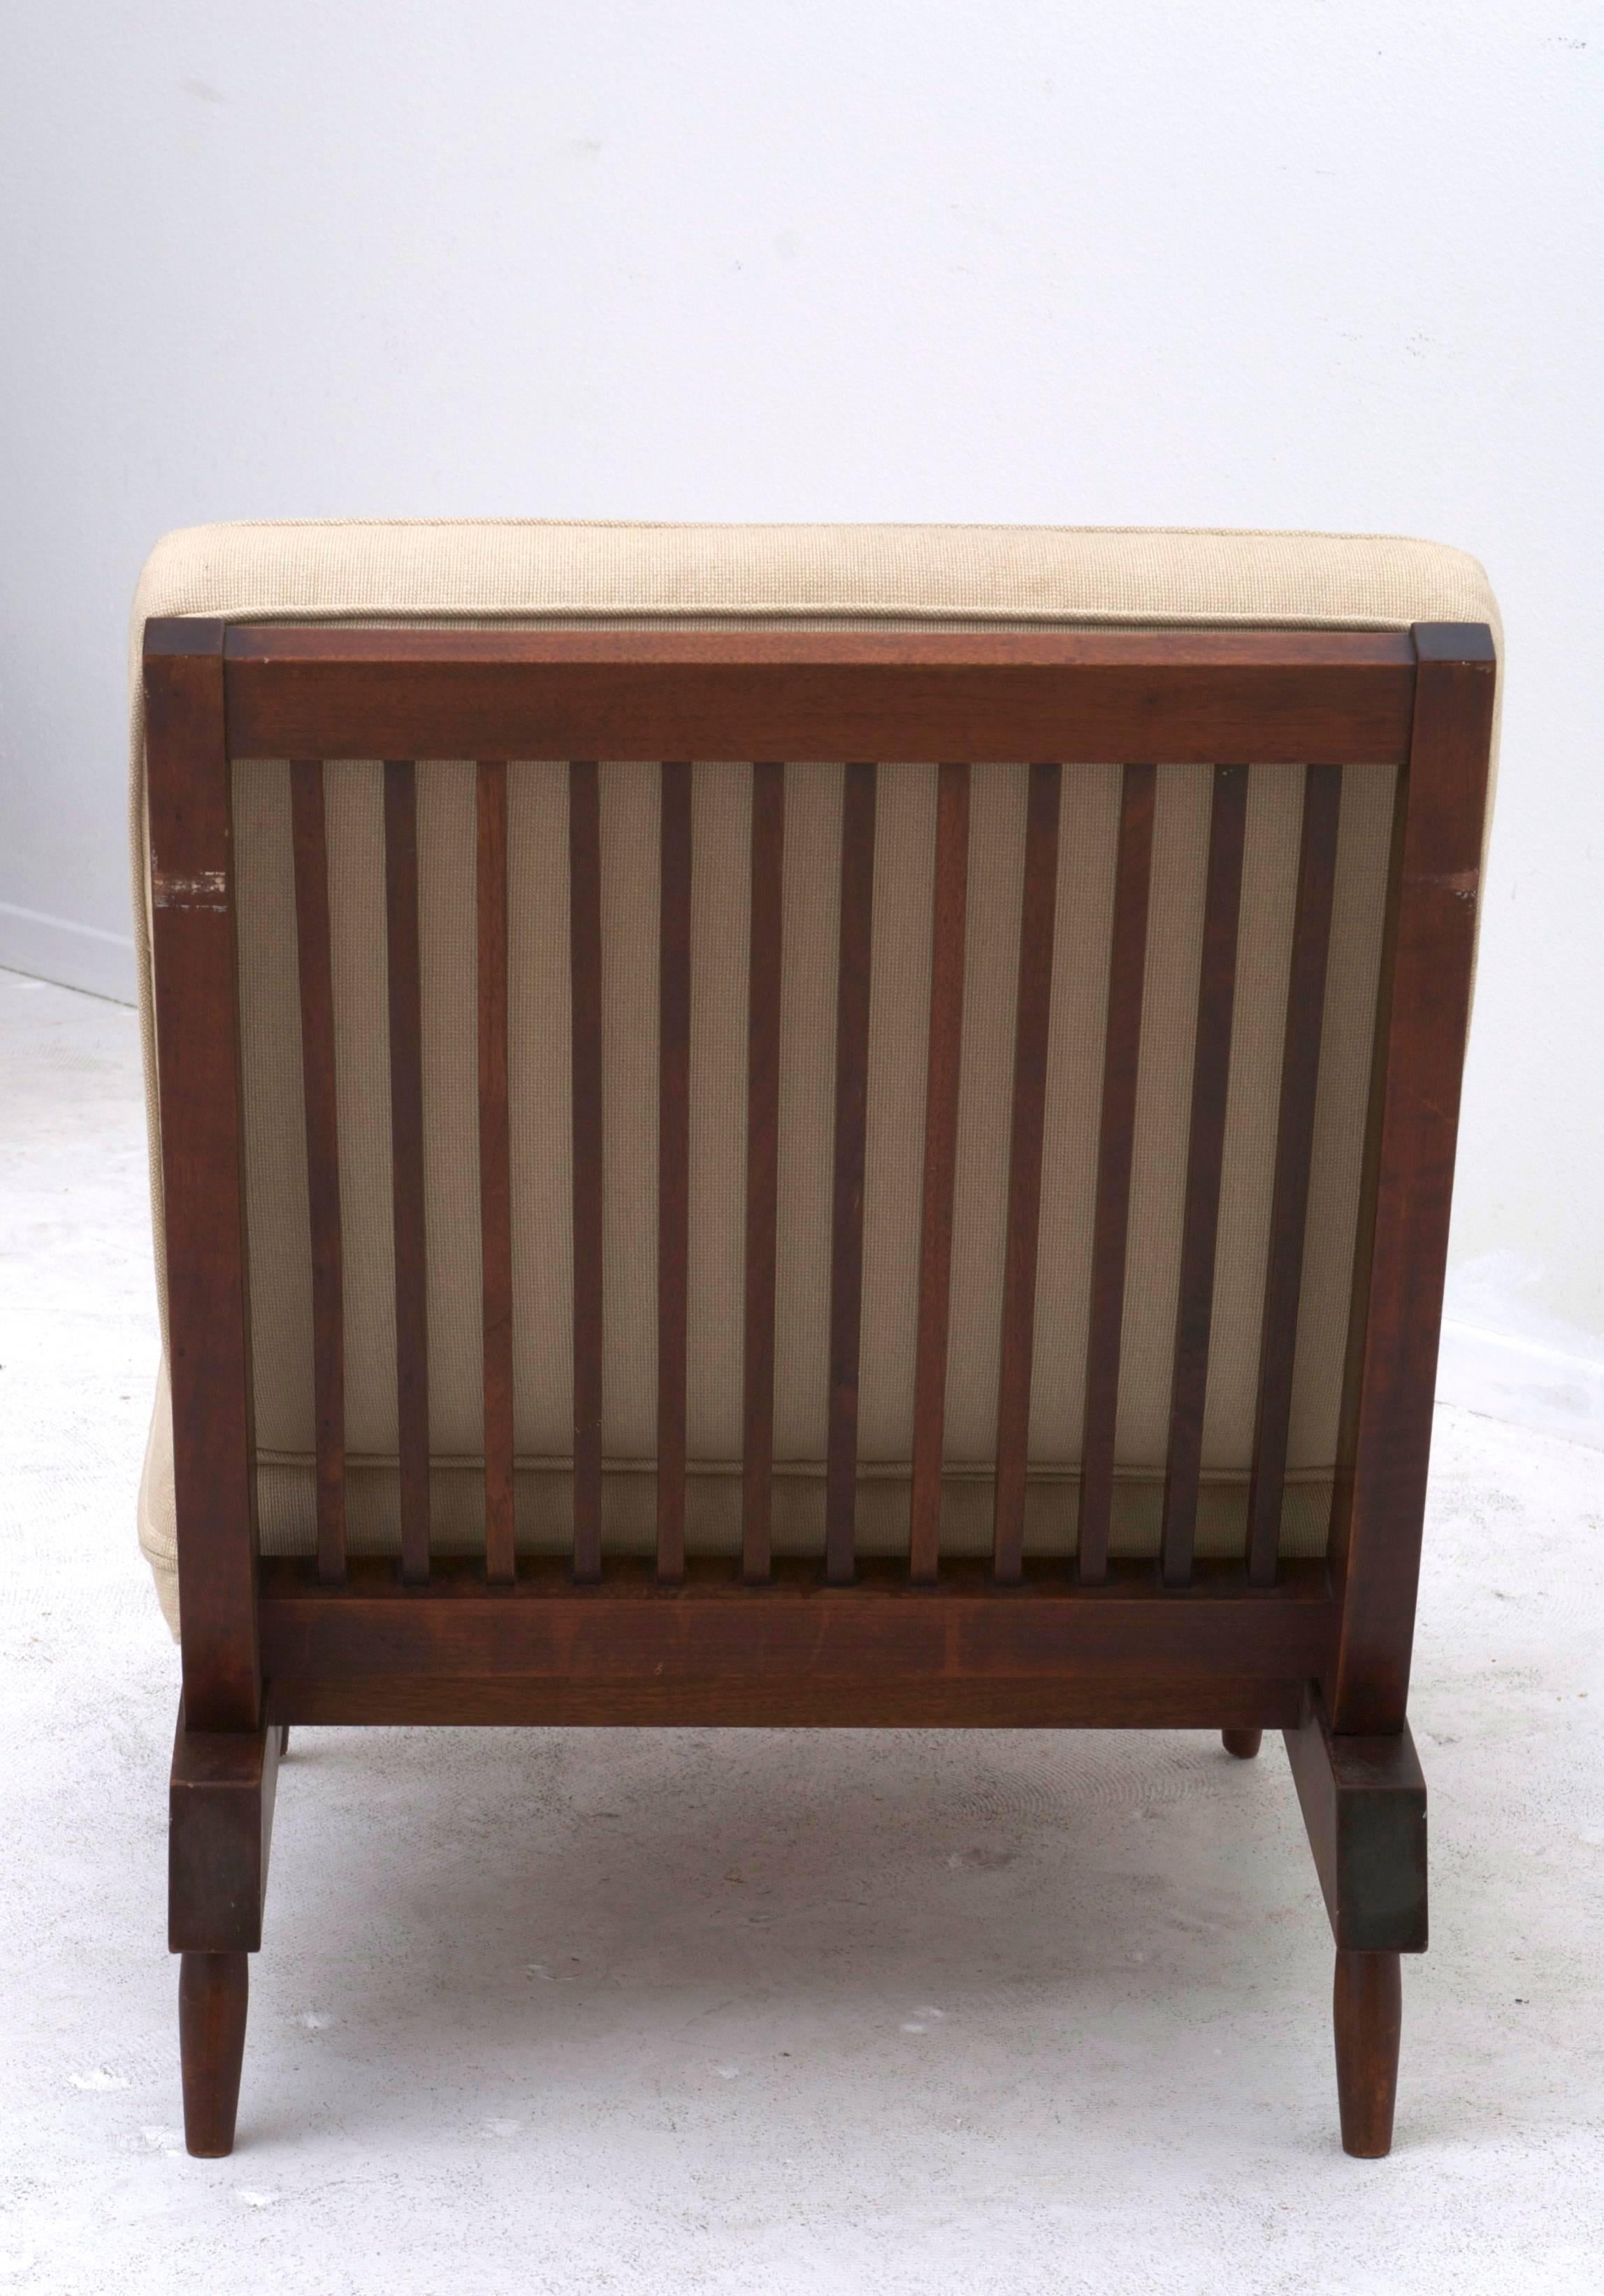  George Nakashima Spindle Back Cushion Chair 2